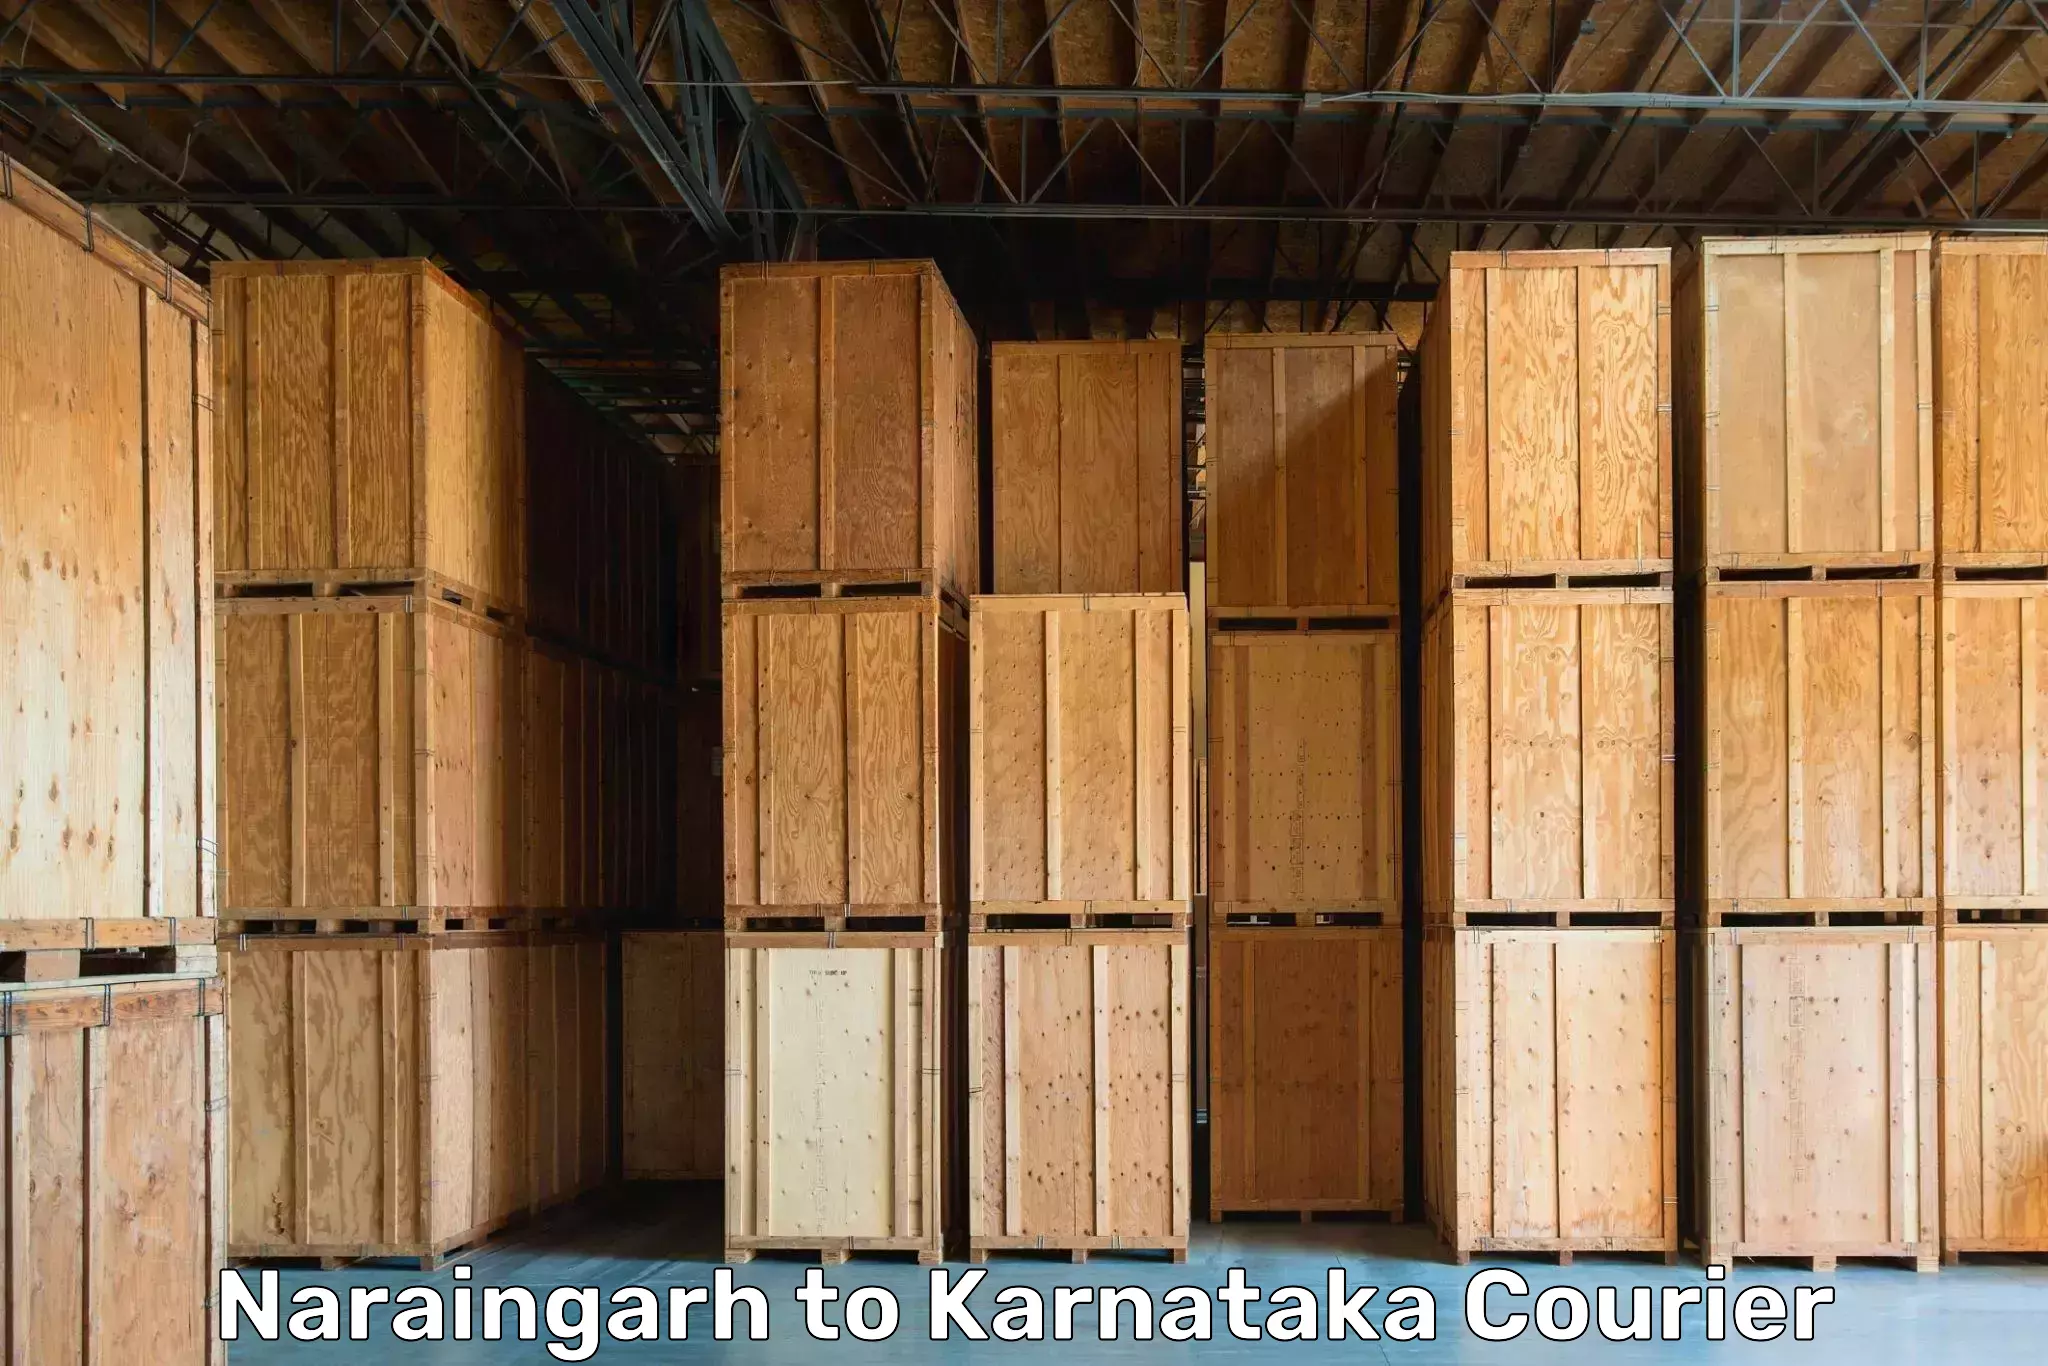 Professional moving company in Naraingarh to Karnataka